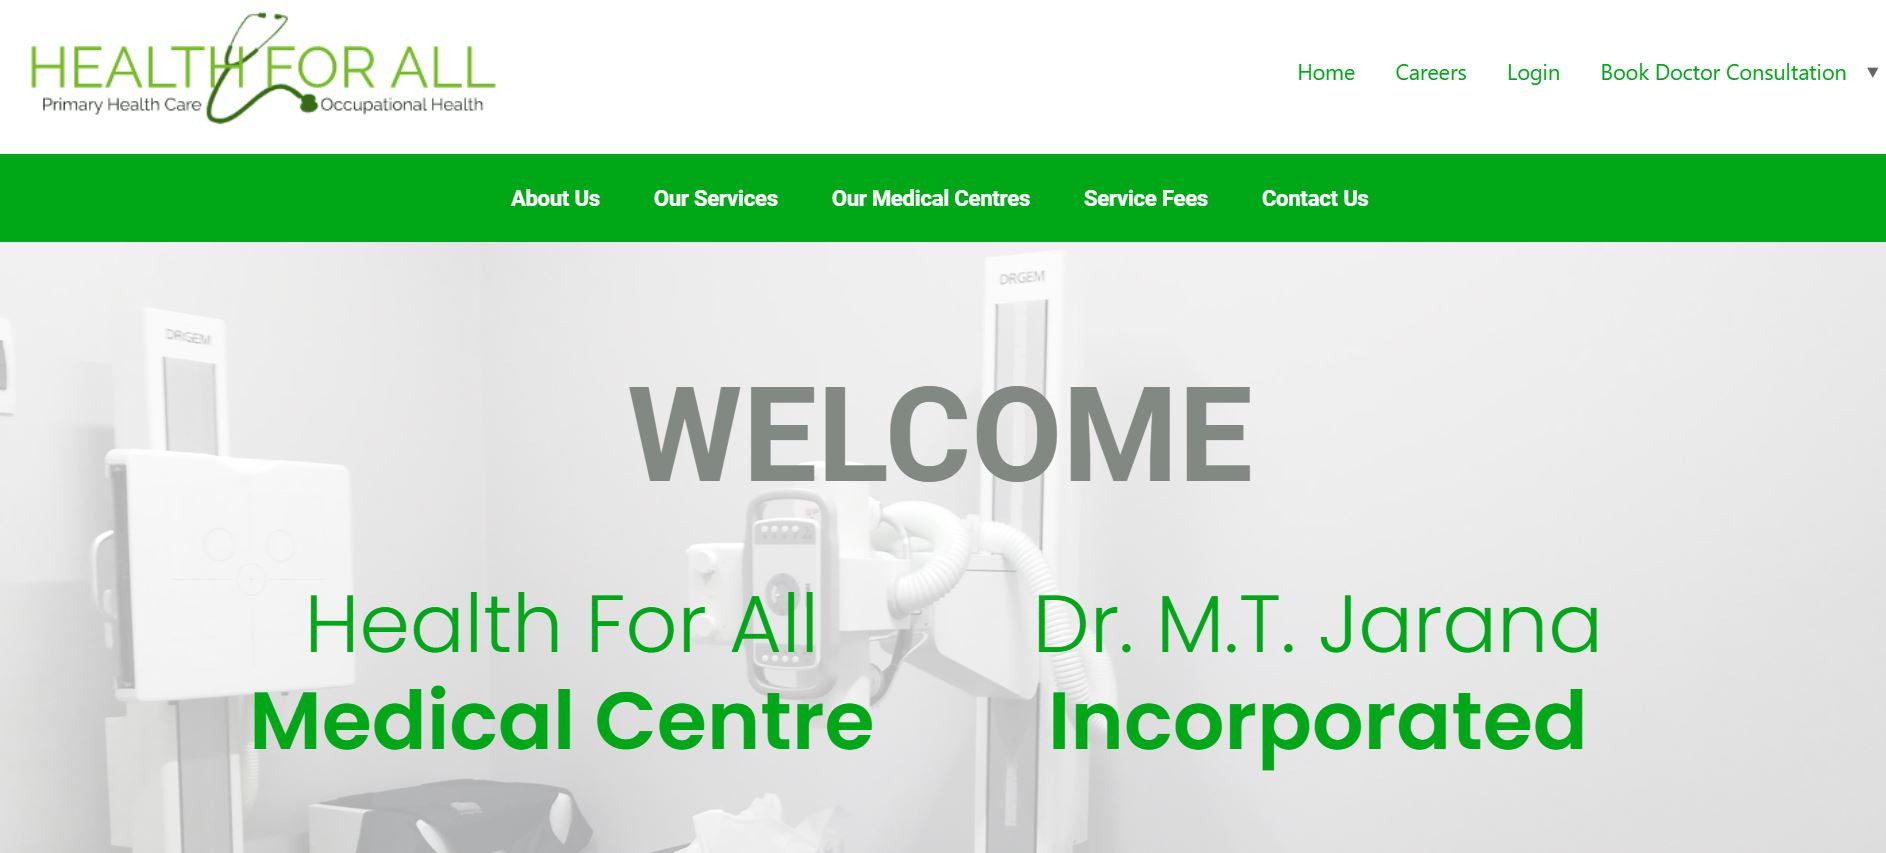 Health For All Medical Centre Website